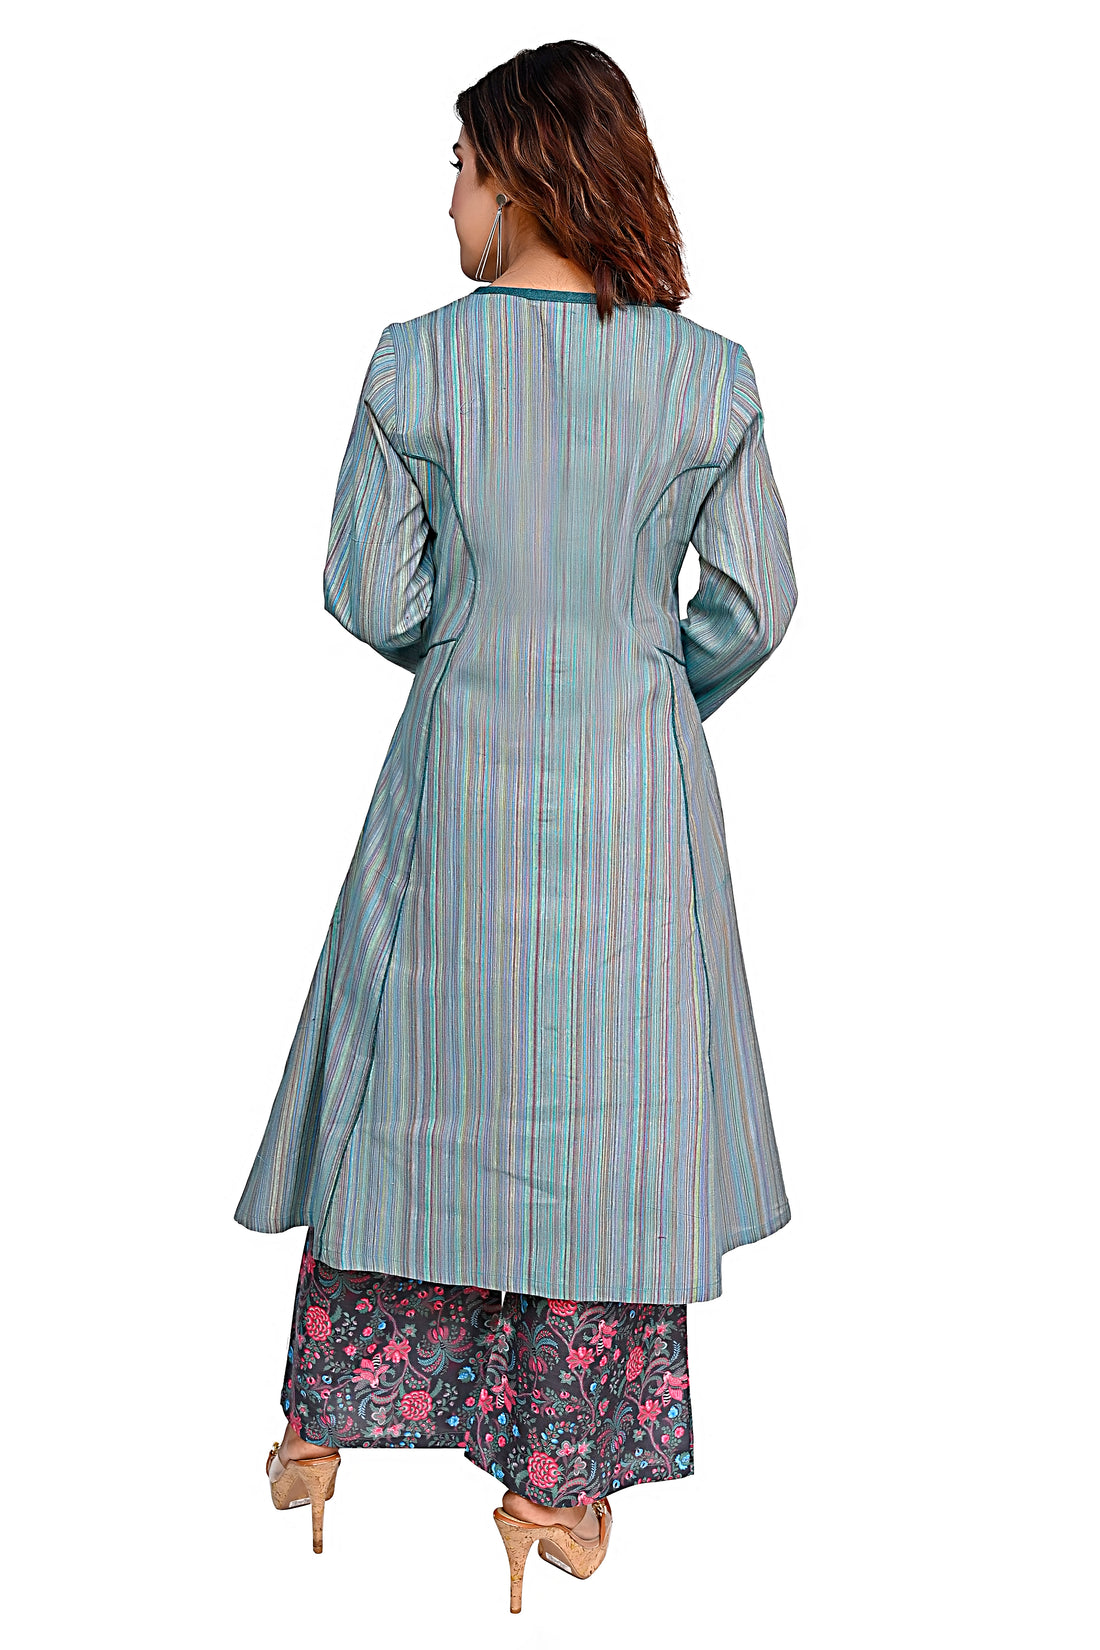 Nirmal Online Premium Cotton co-ord set for Women in Green Colour Stripe